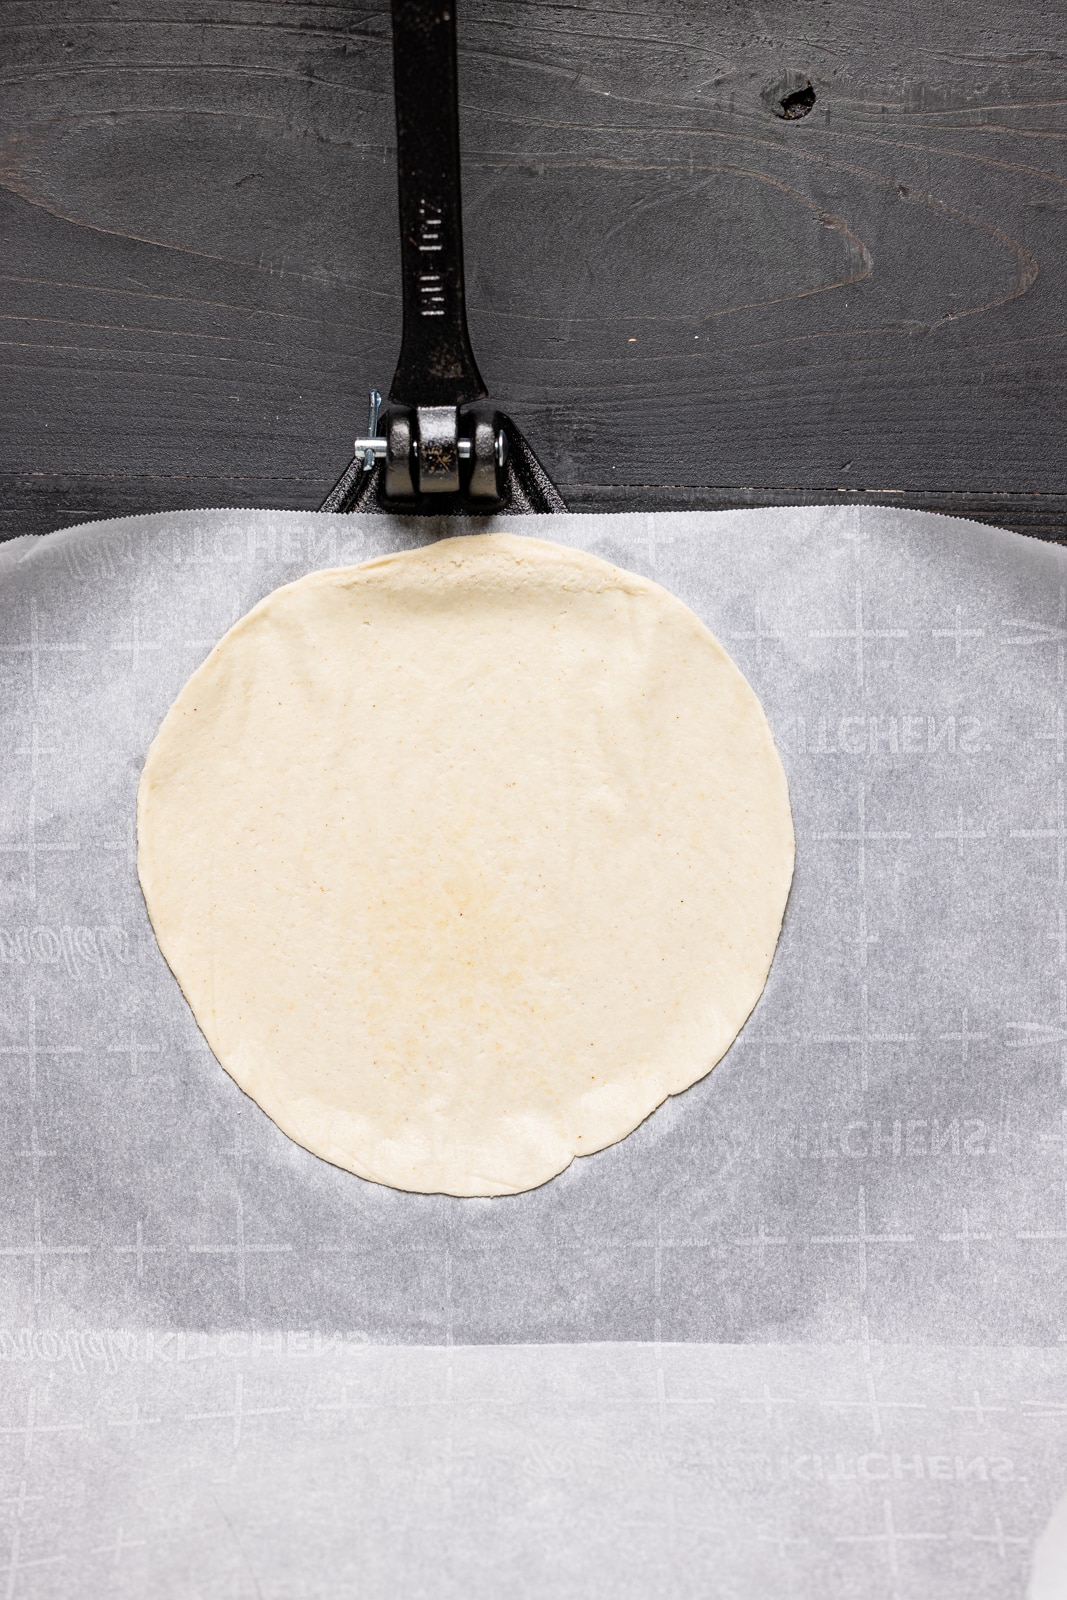 Flattened tortilla dough on parchment paper.